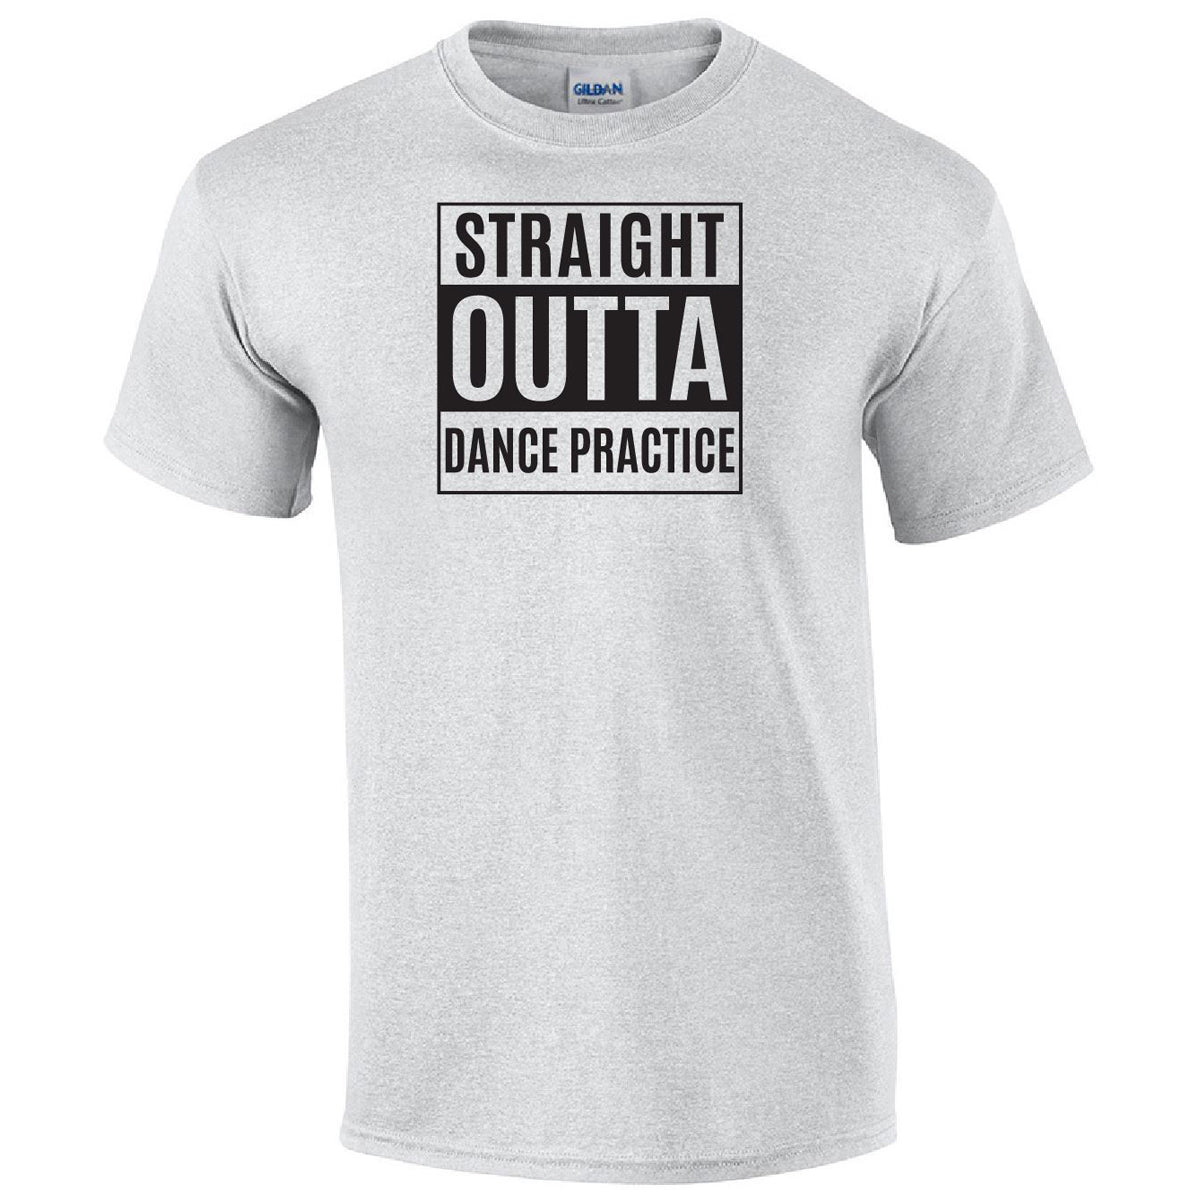 Straight Outta Dance Practice Printed Tee Humorous Shirt 411 Youth Medium Ash 